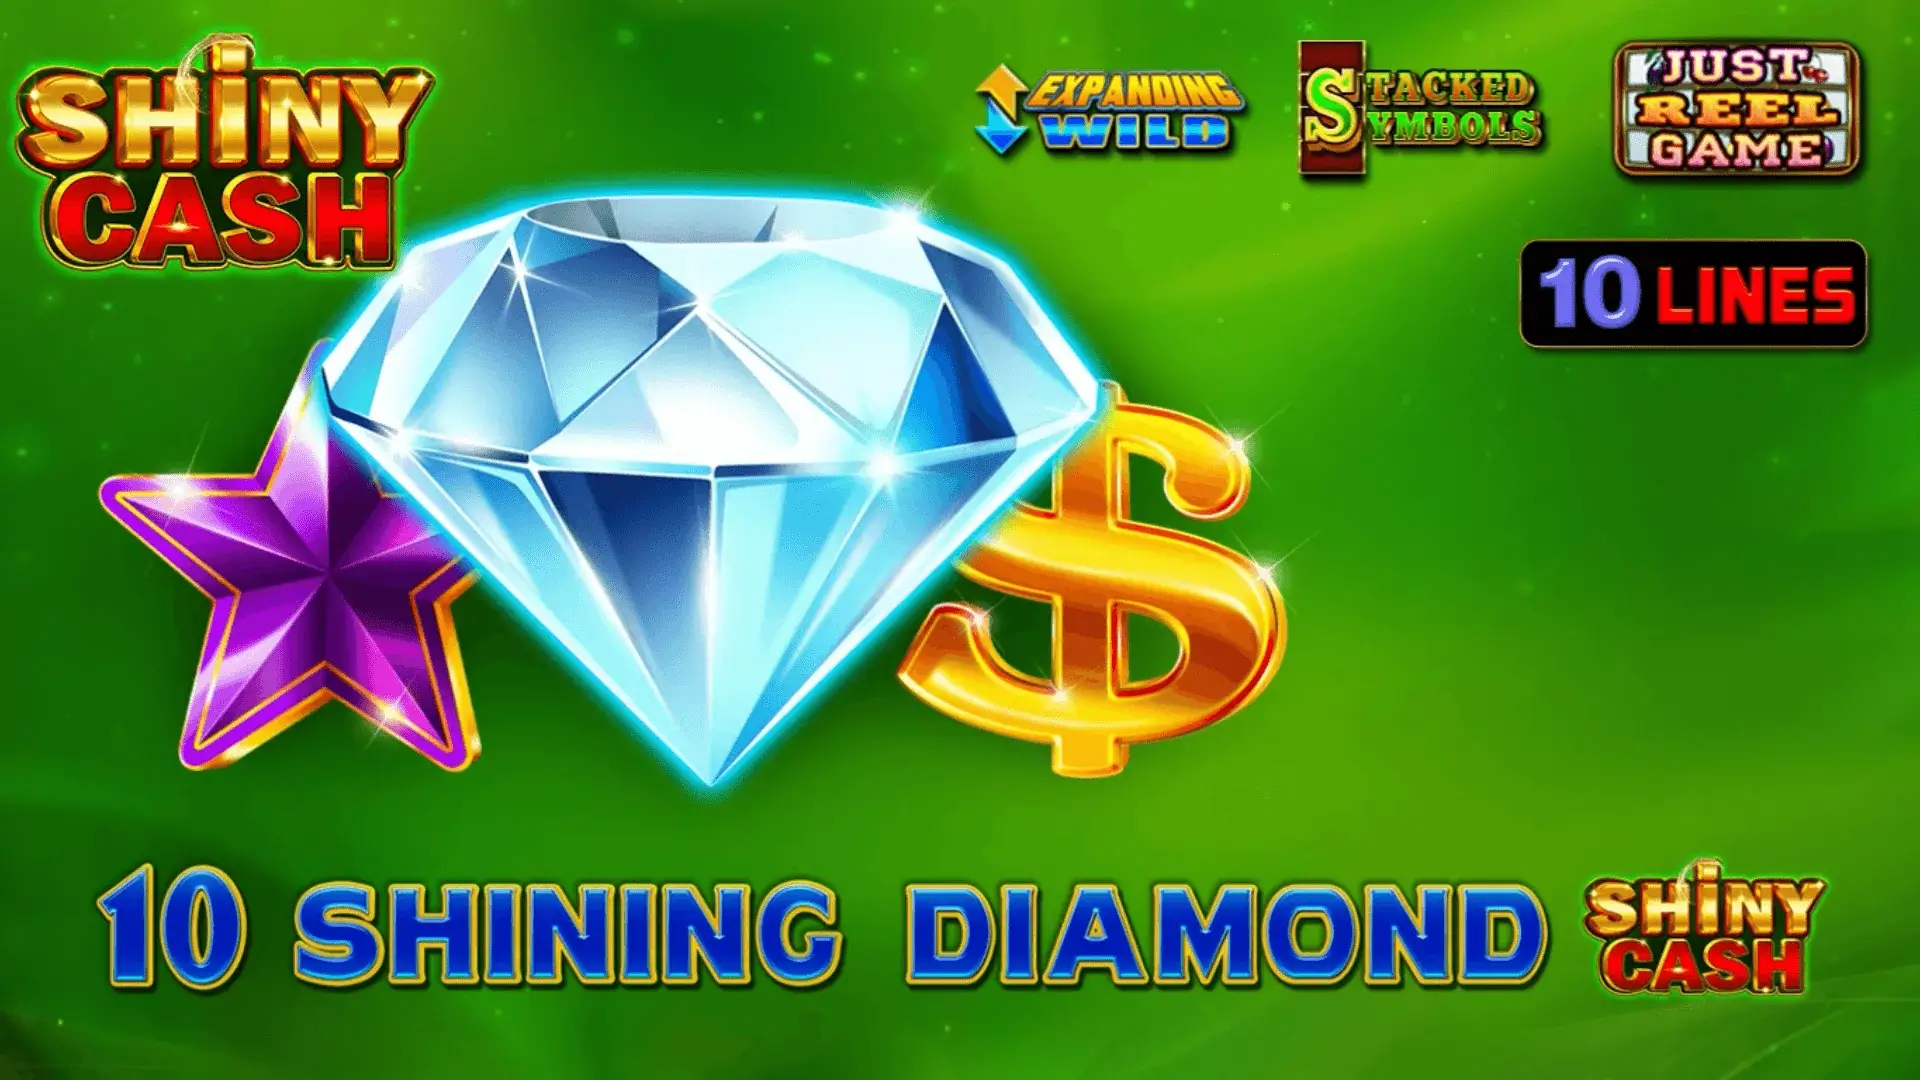 egt games general series bonus prize general 10 shining diamond shiny cash 2